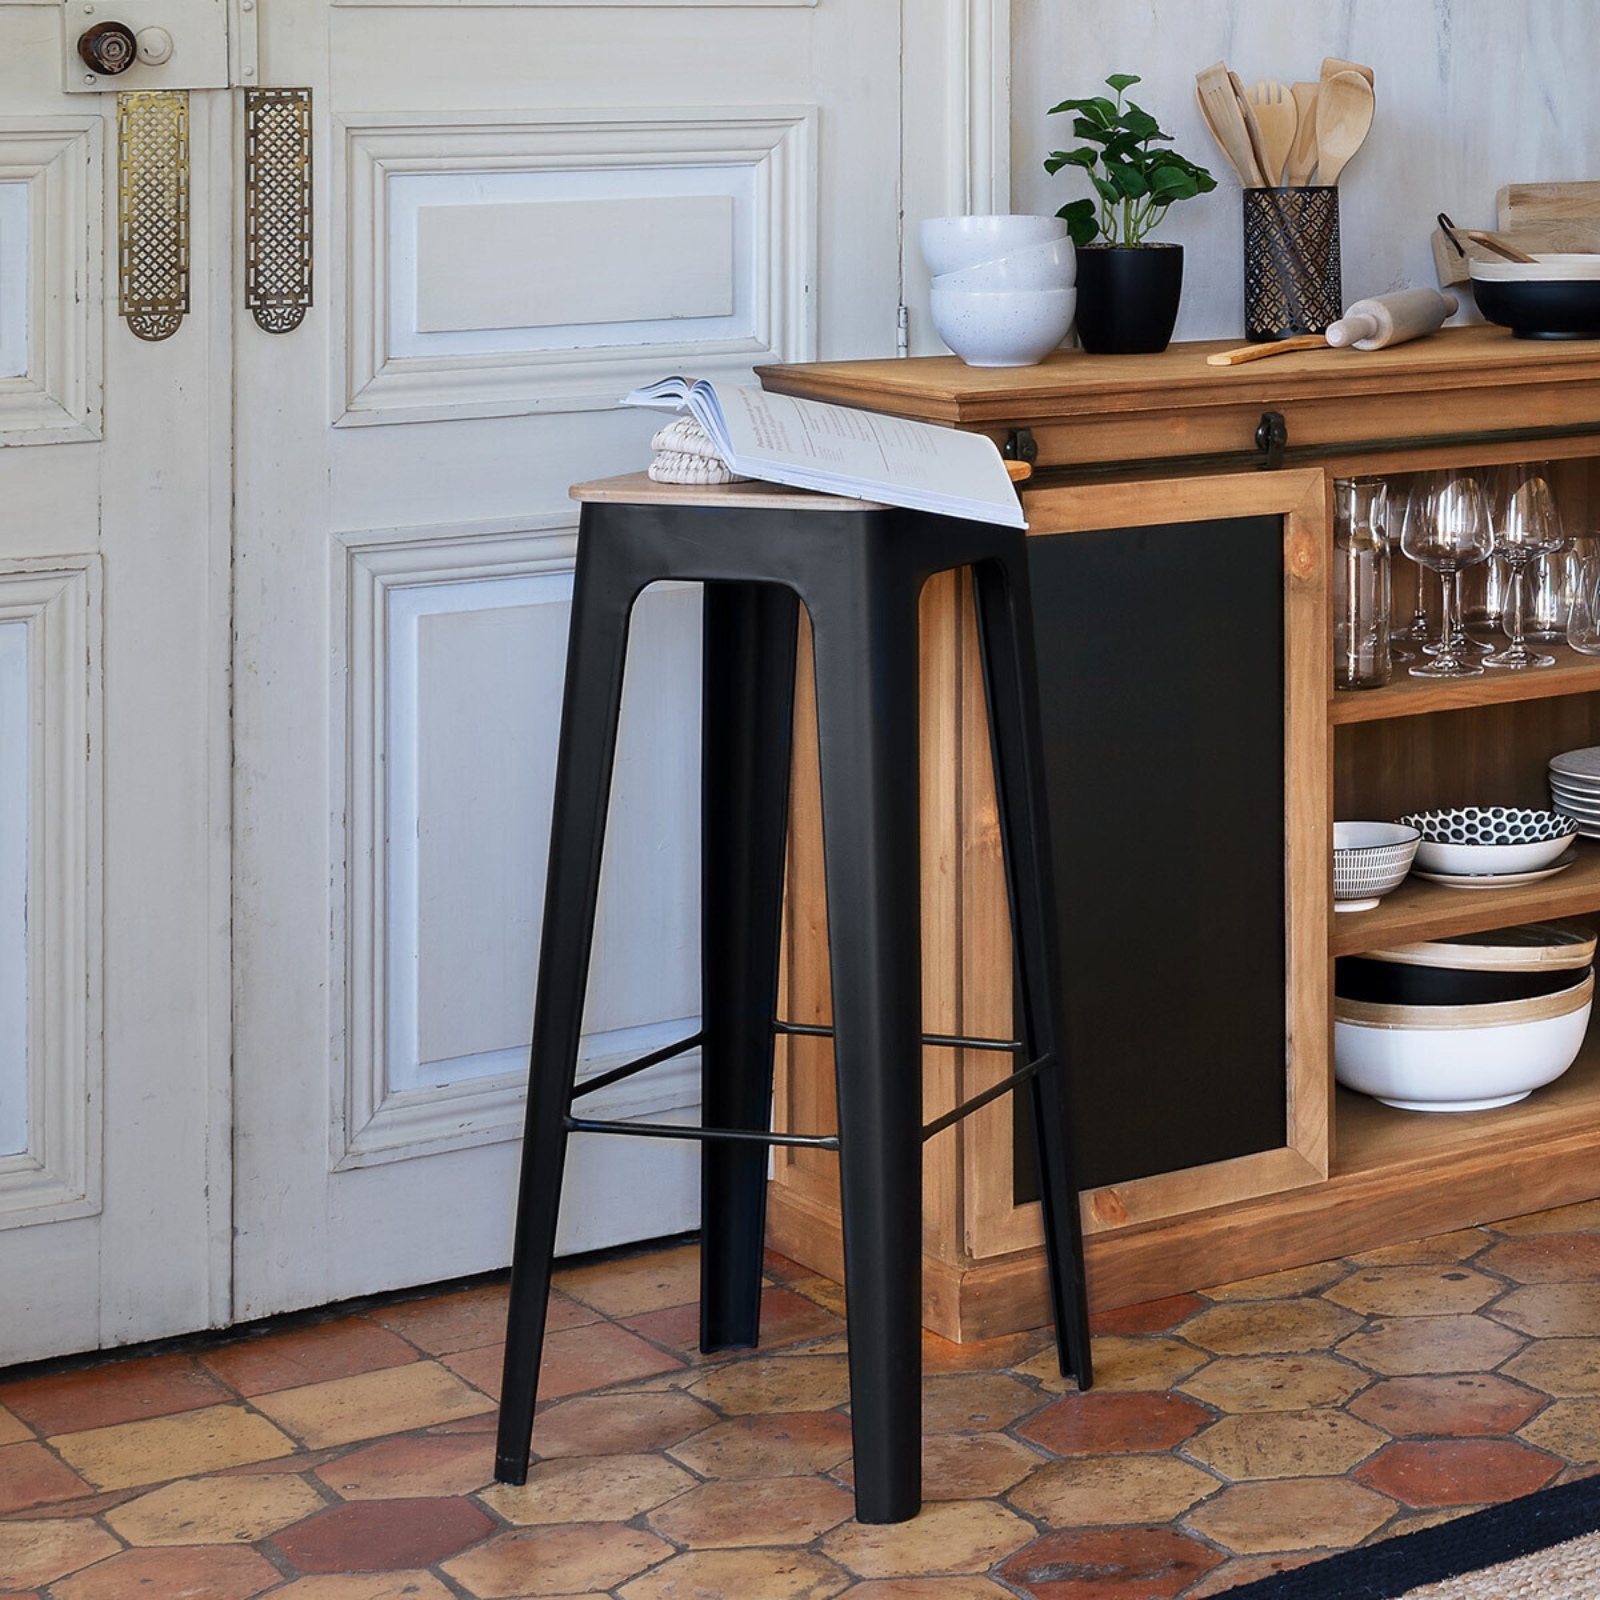 Sgabello da bar o cucina "Lota" design moderno nero struttura in acciaio e seduta in legno H 80cm